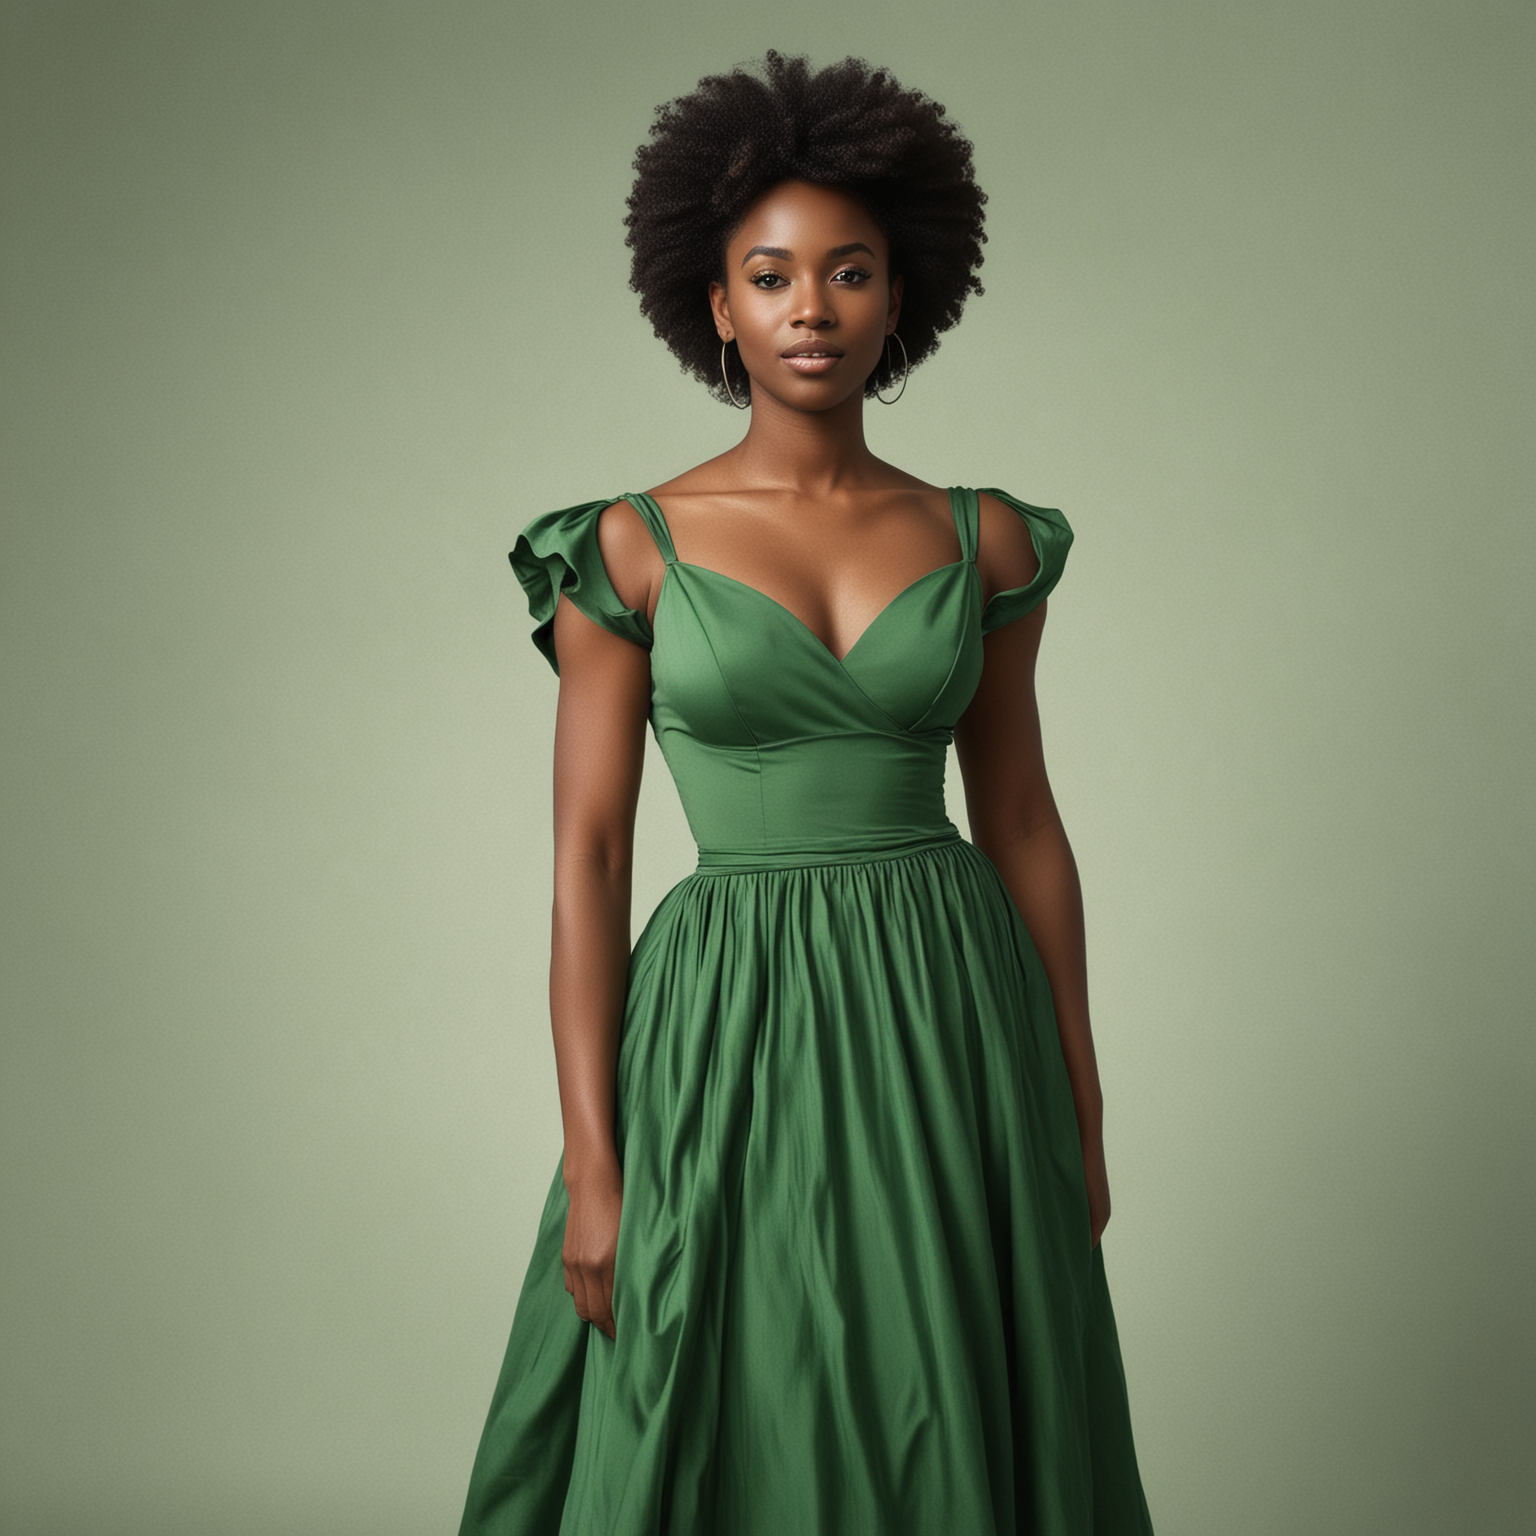 Elegant Black Woman in Vibrant Green Dress